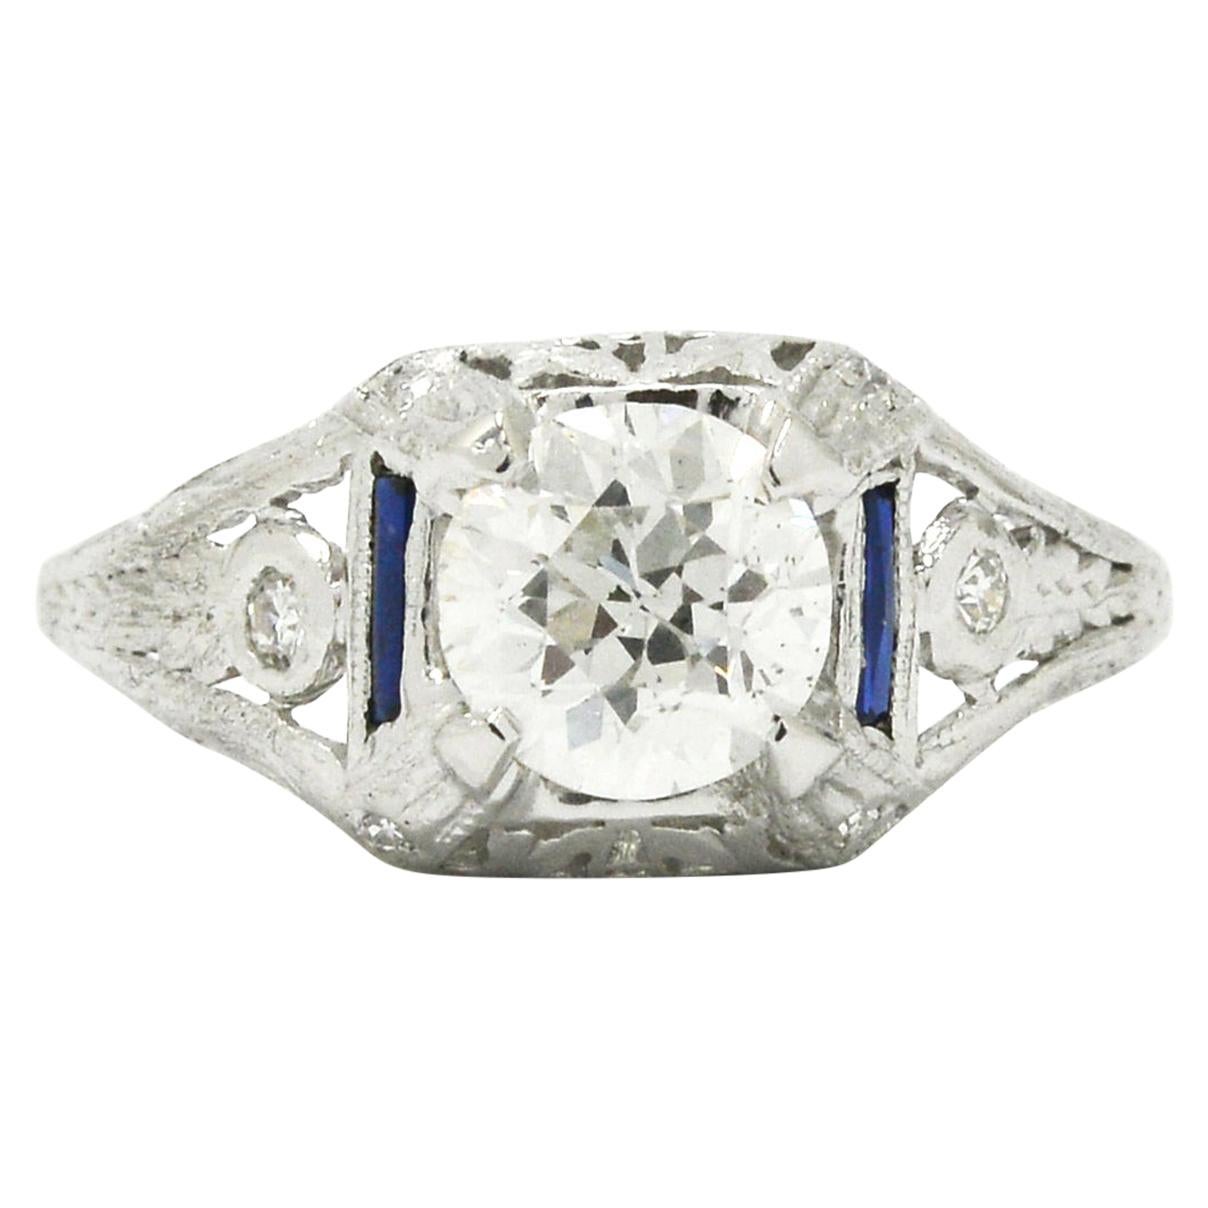 Antique Diamond Solitaire Engagement Ring 1 Carat + Certified Old European Cut